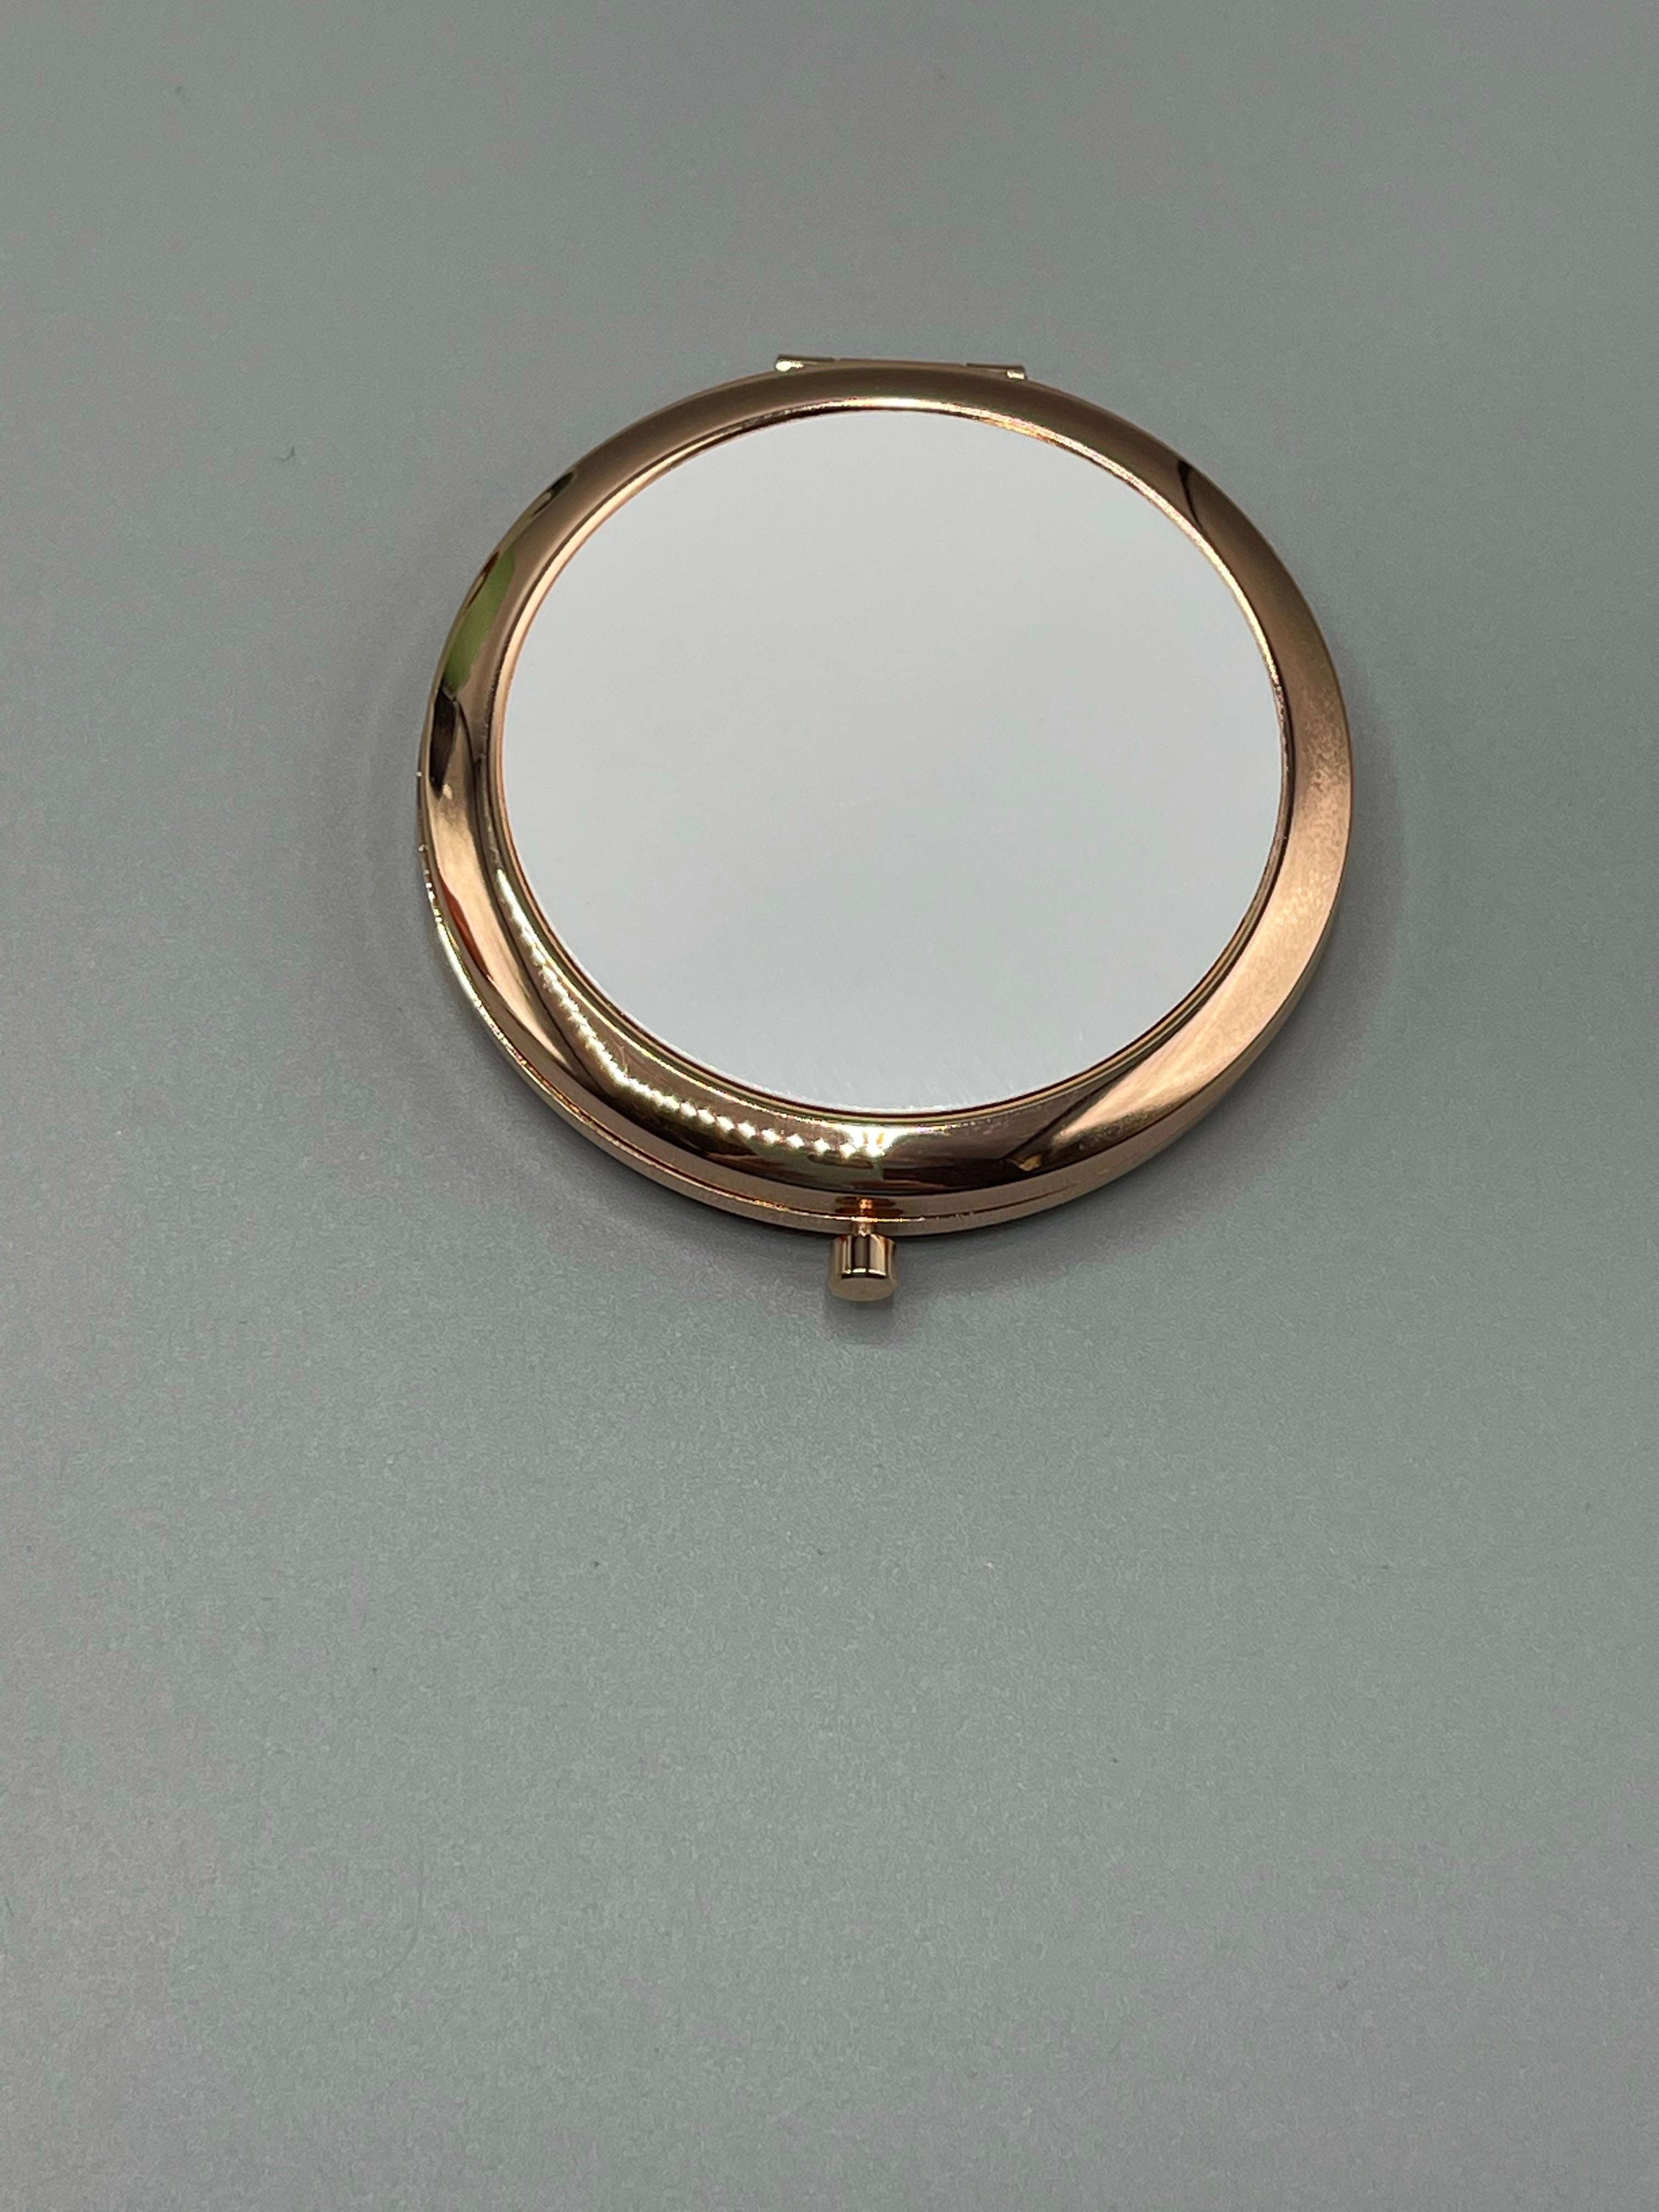 Sublimation compact mirror